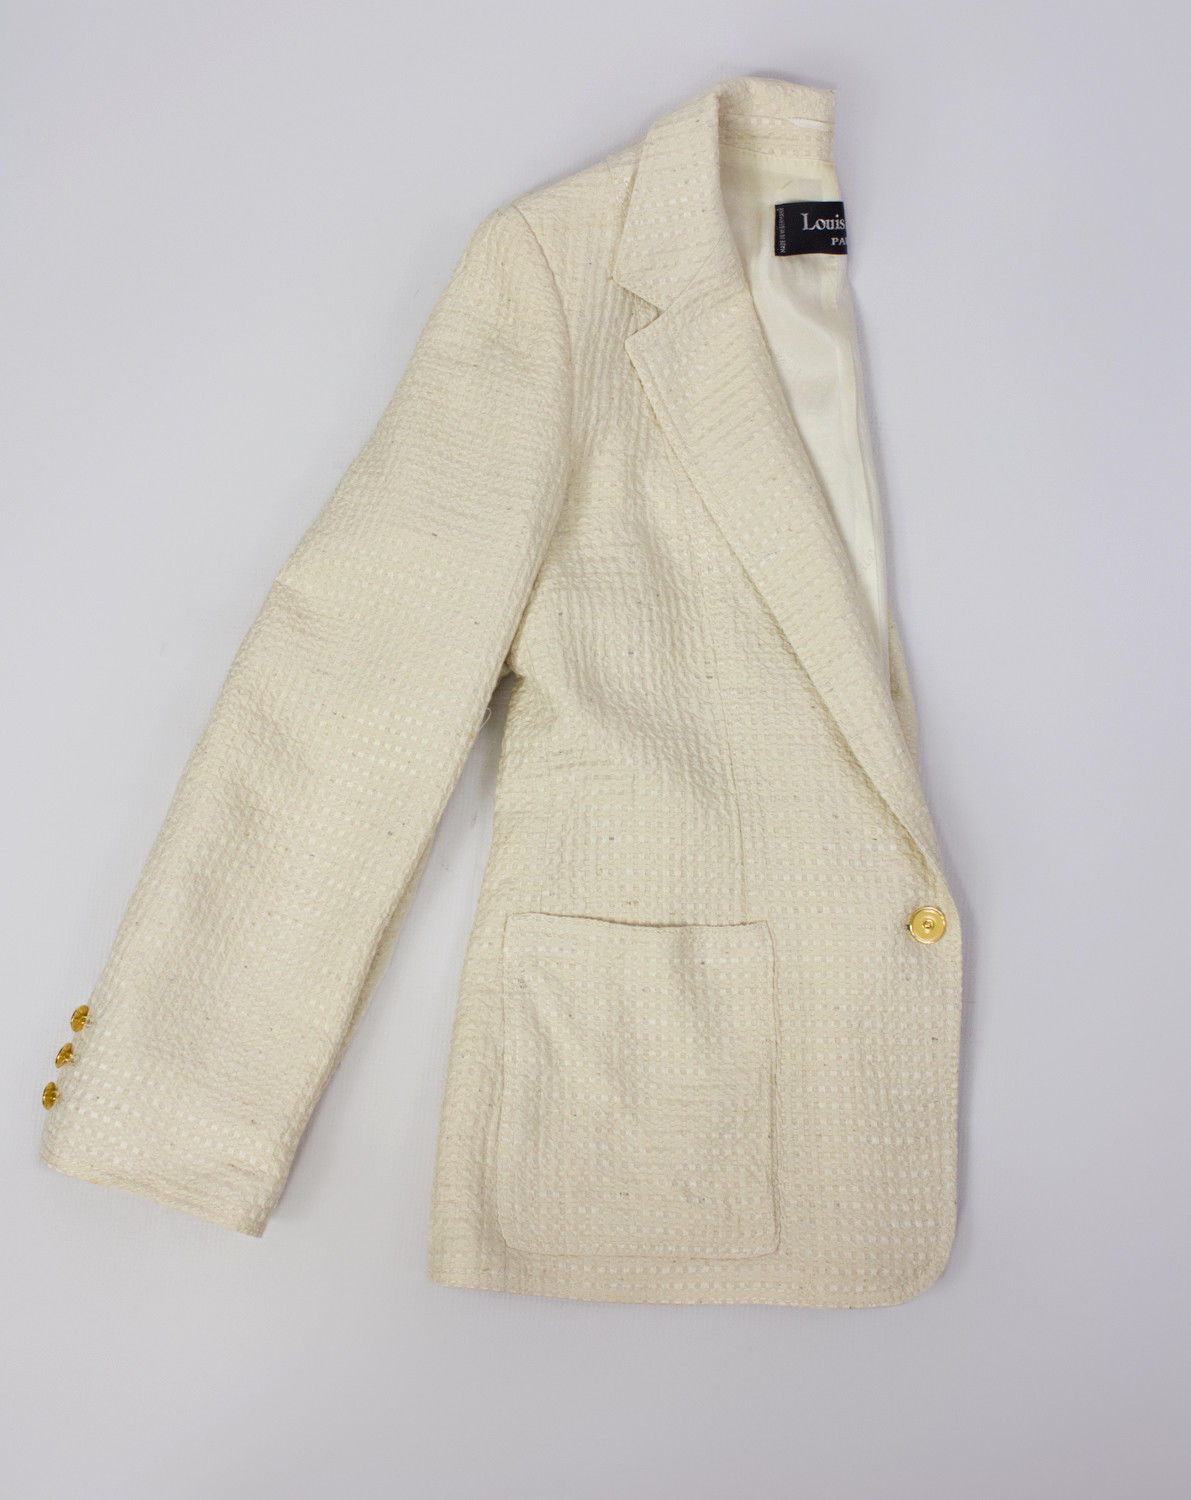 Louis Feraud Vintage Double Breasted Wool Suit